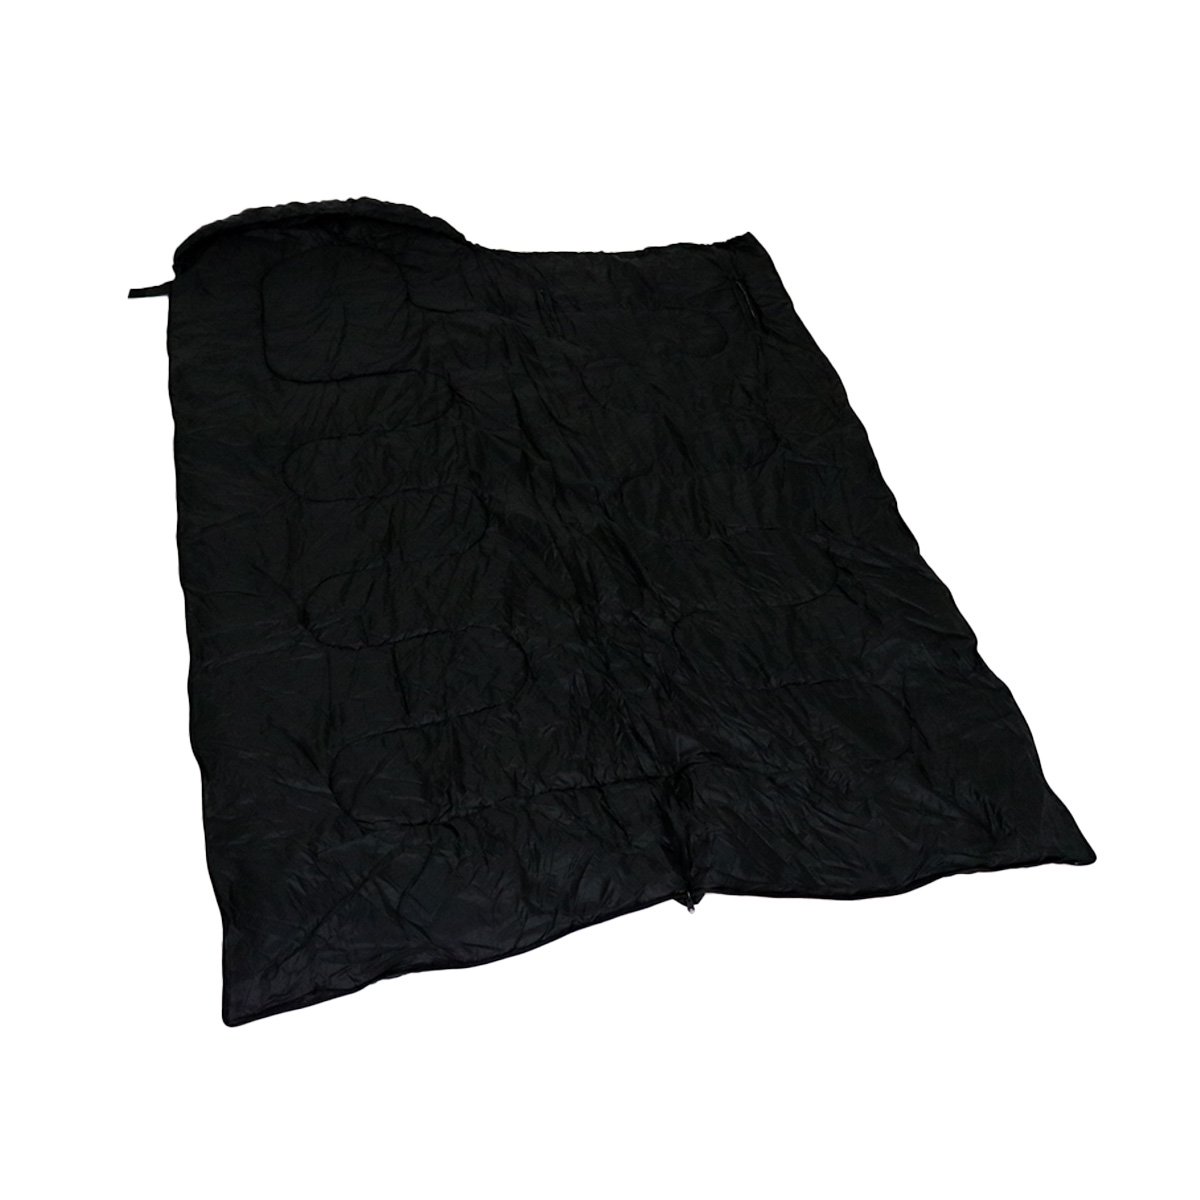 HAGLOFS 寝袋 ロングサイズ 使用限界温度:-18ºC - アウトドア寝具